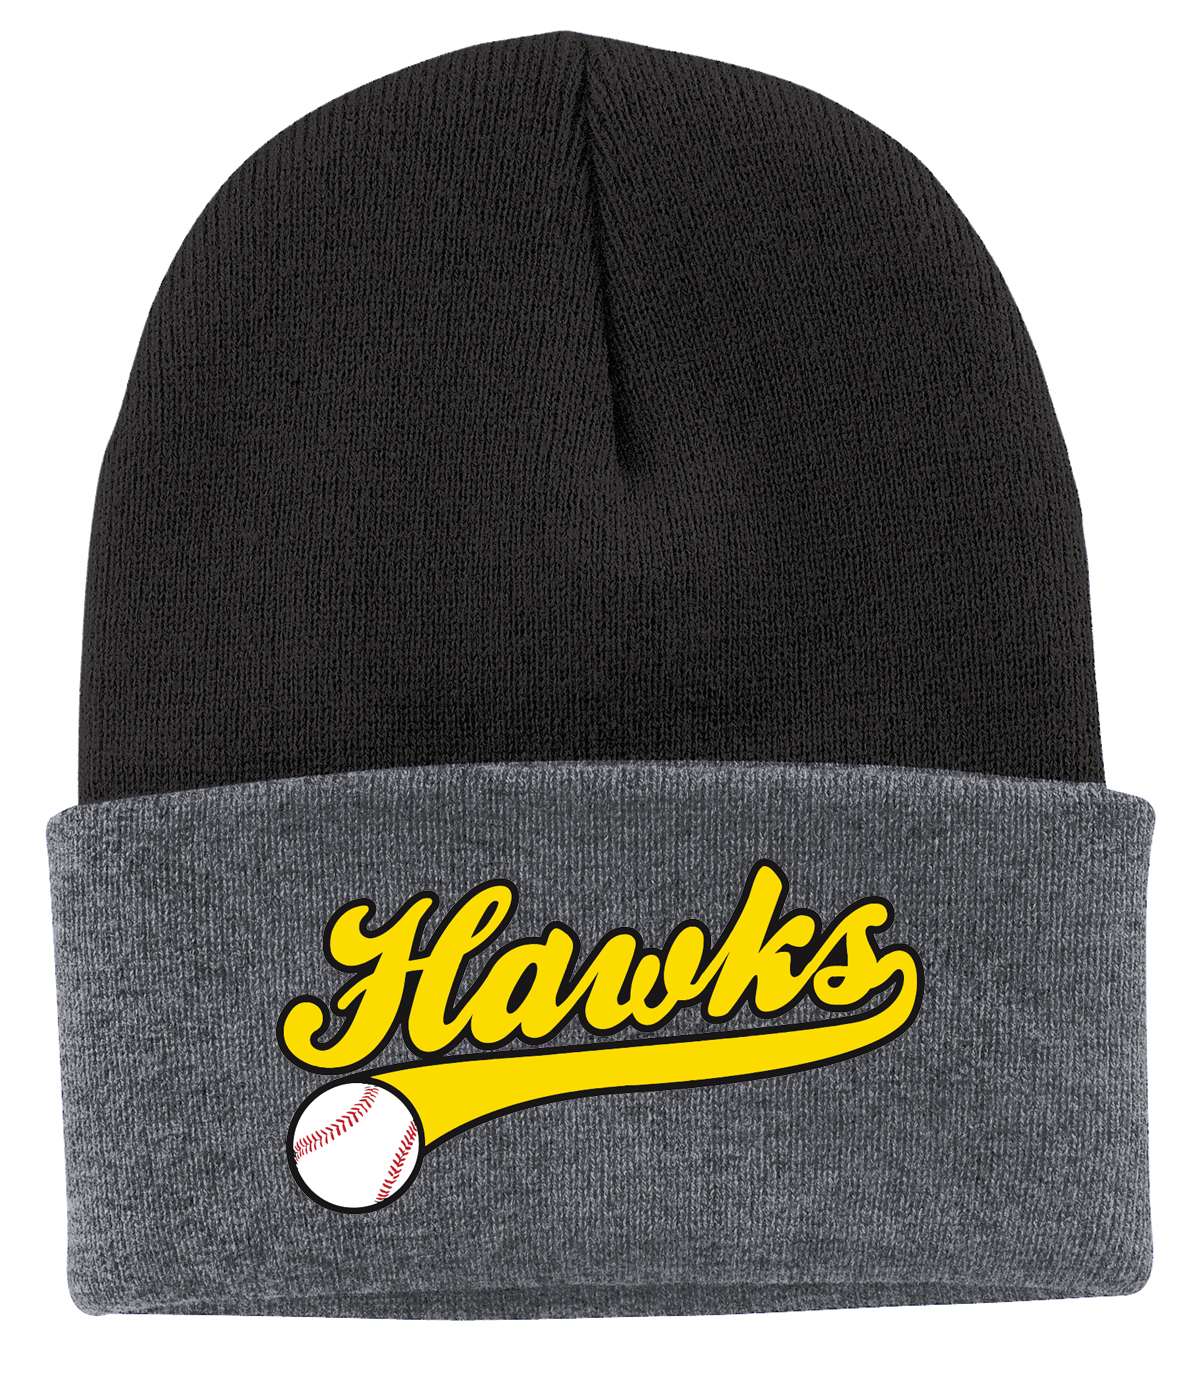 Hawks Baseball Knit Beanie